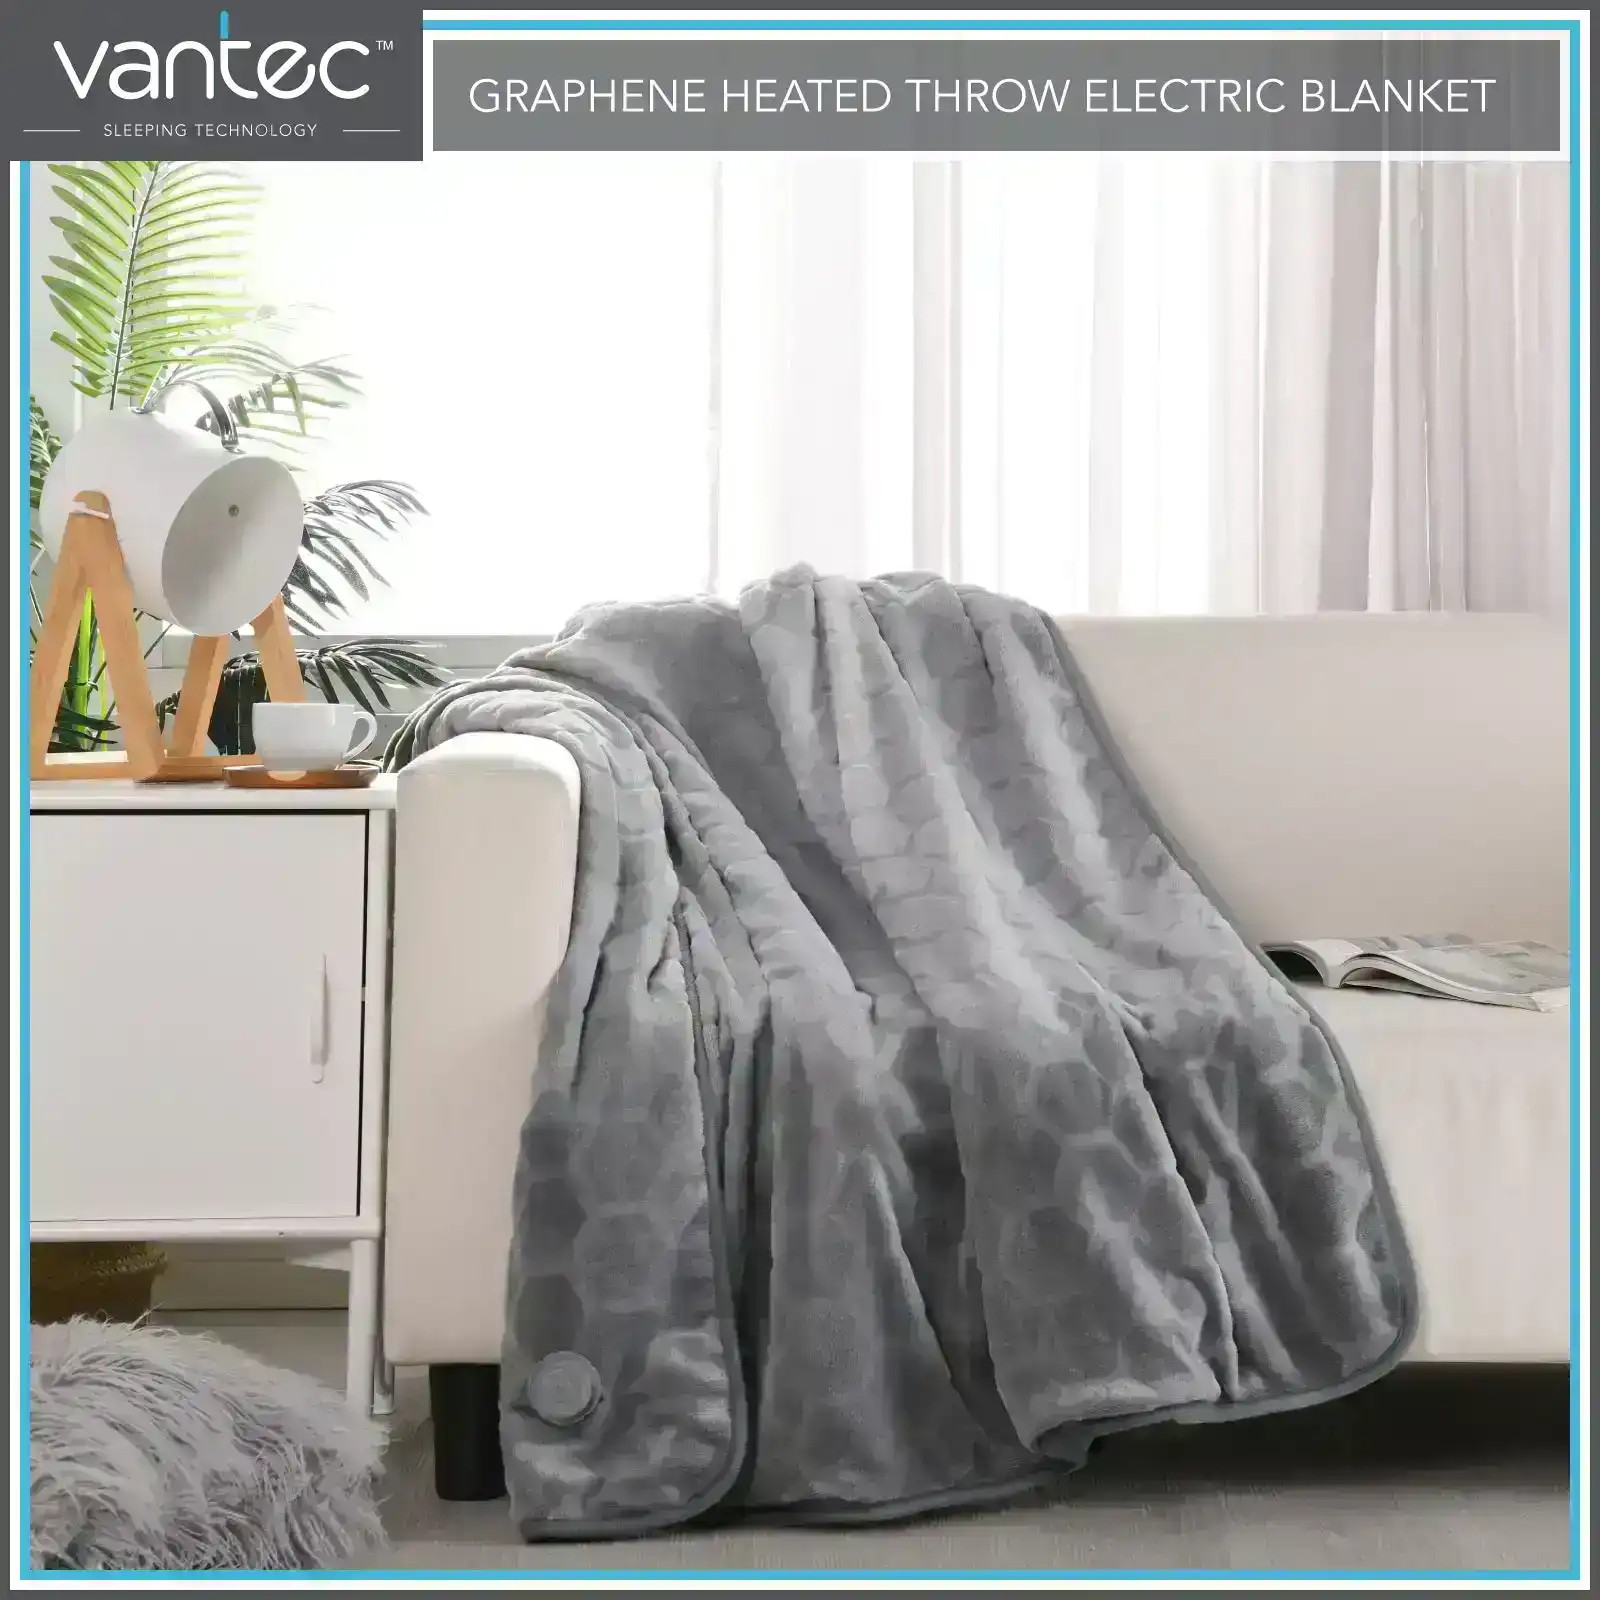 Vantec Graphene Heated Throw Electric Blanket – Grey 152x127cm